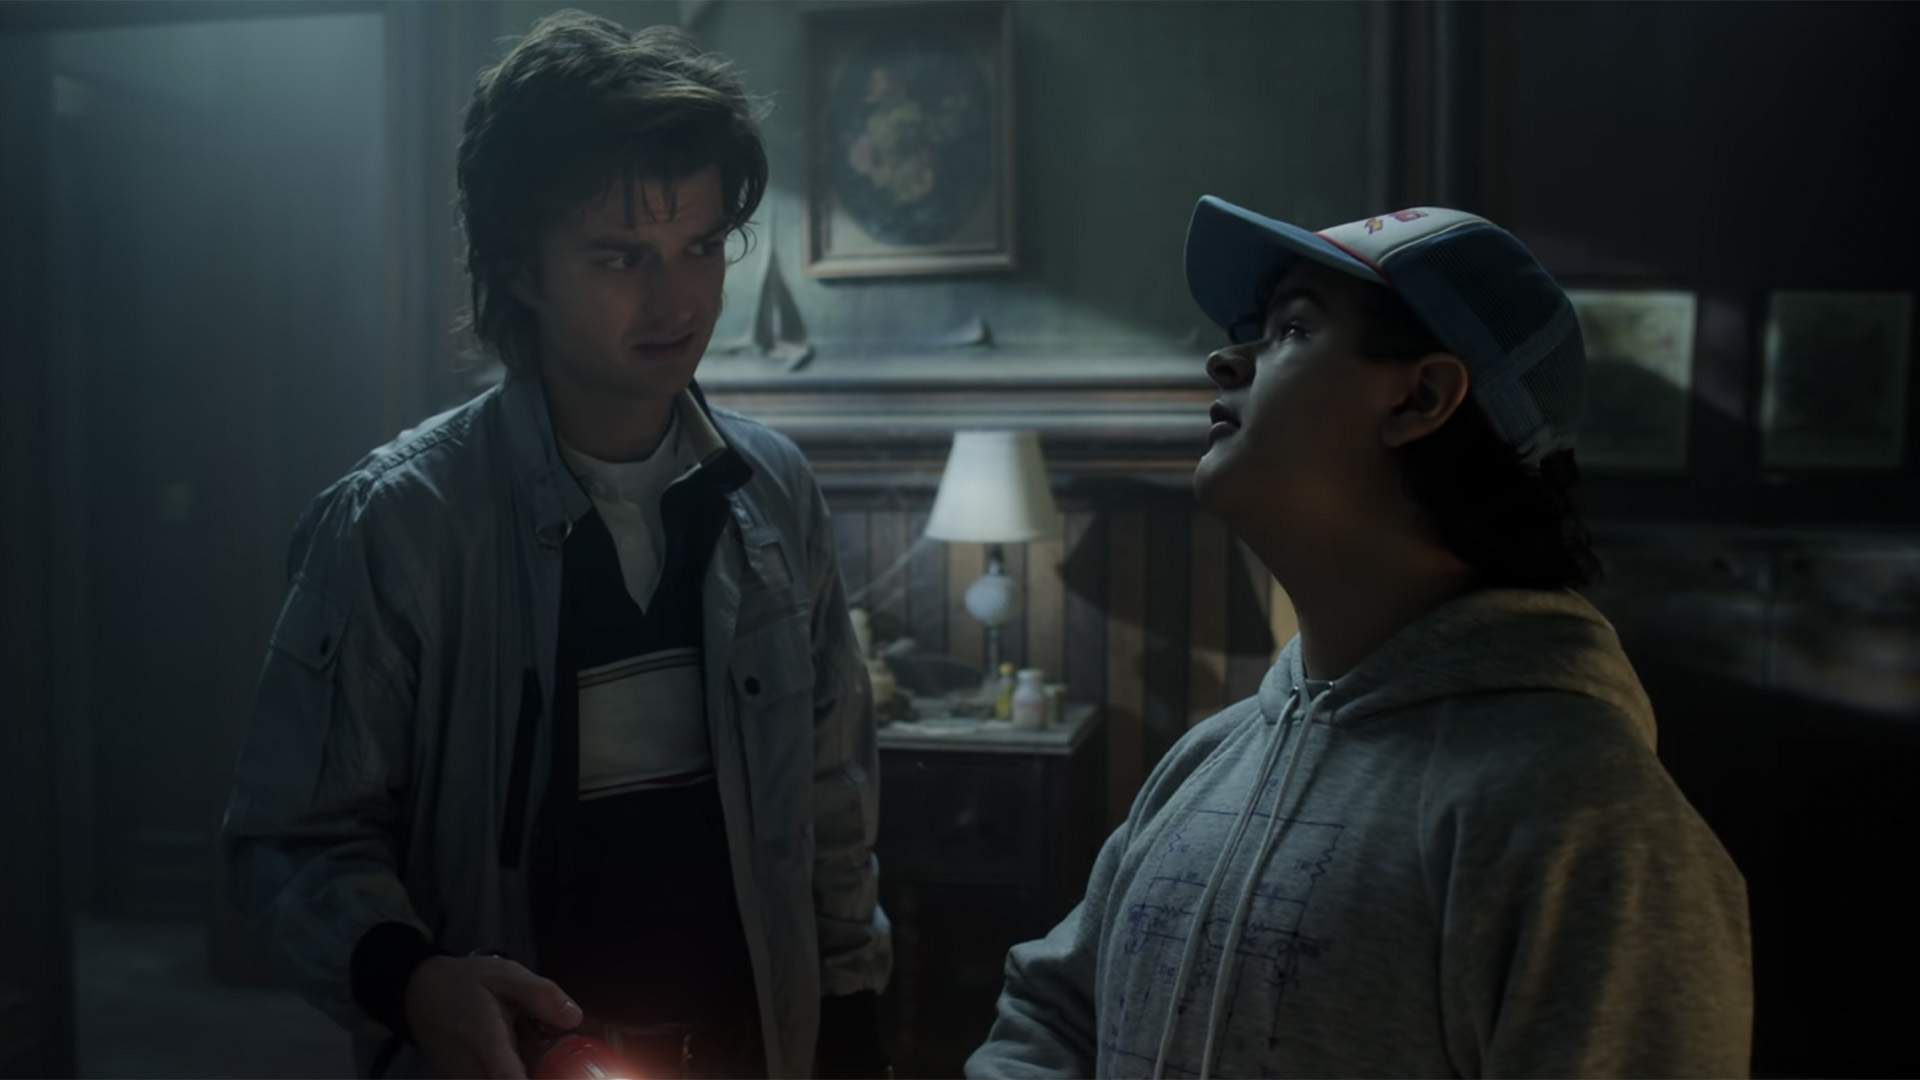 Netflixs Latest Stranger Things Teaser Trailer Moves The Season Four Action To California 3162